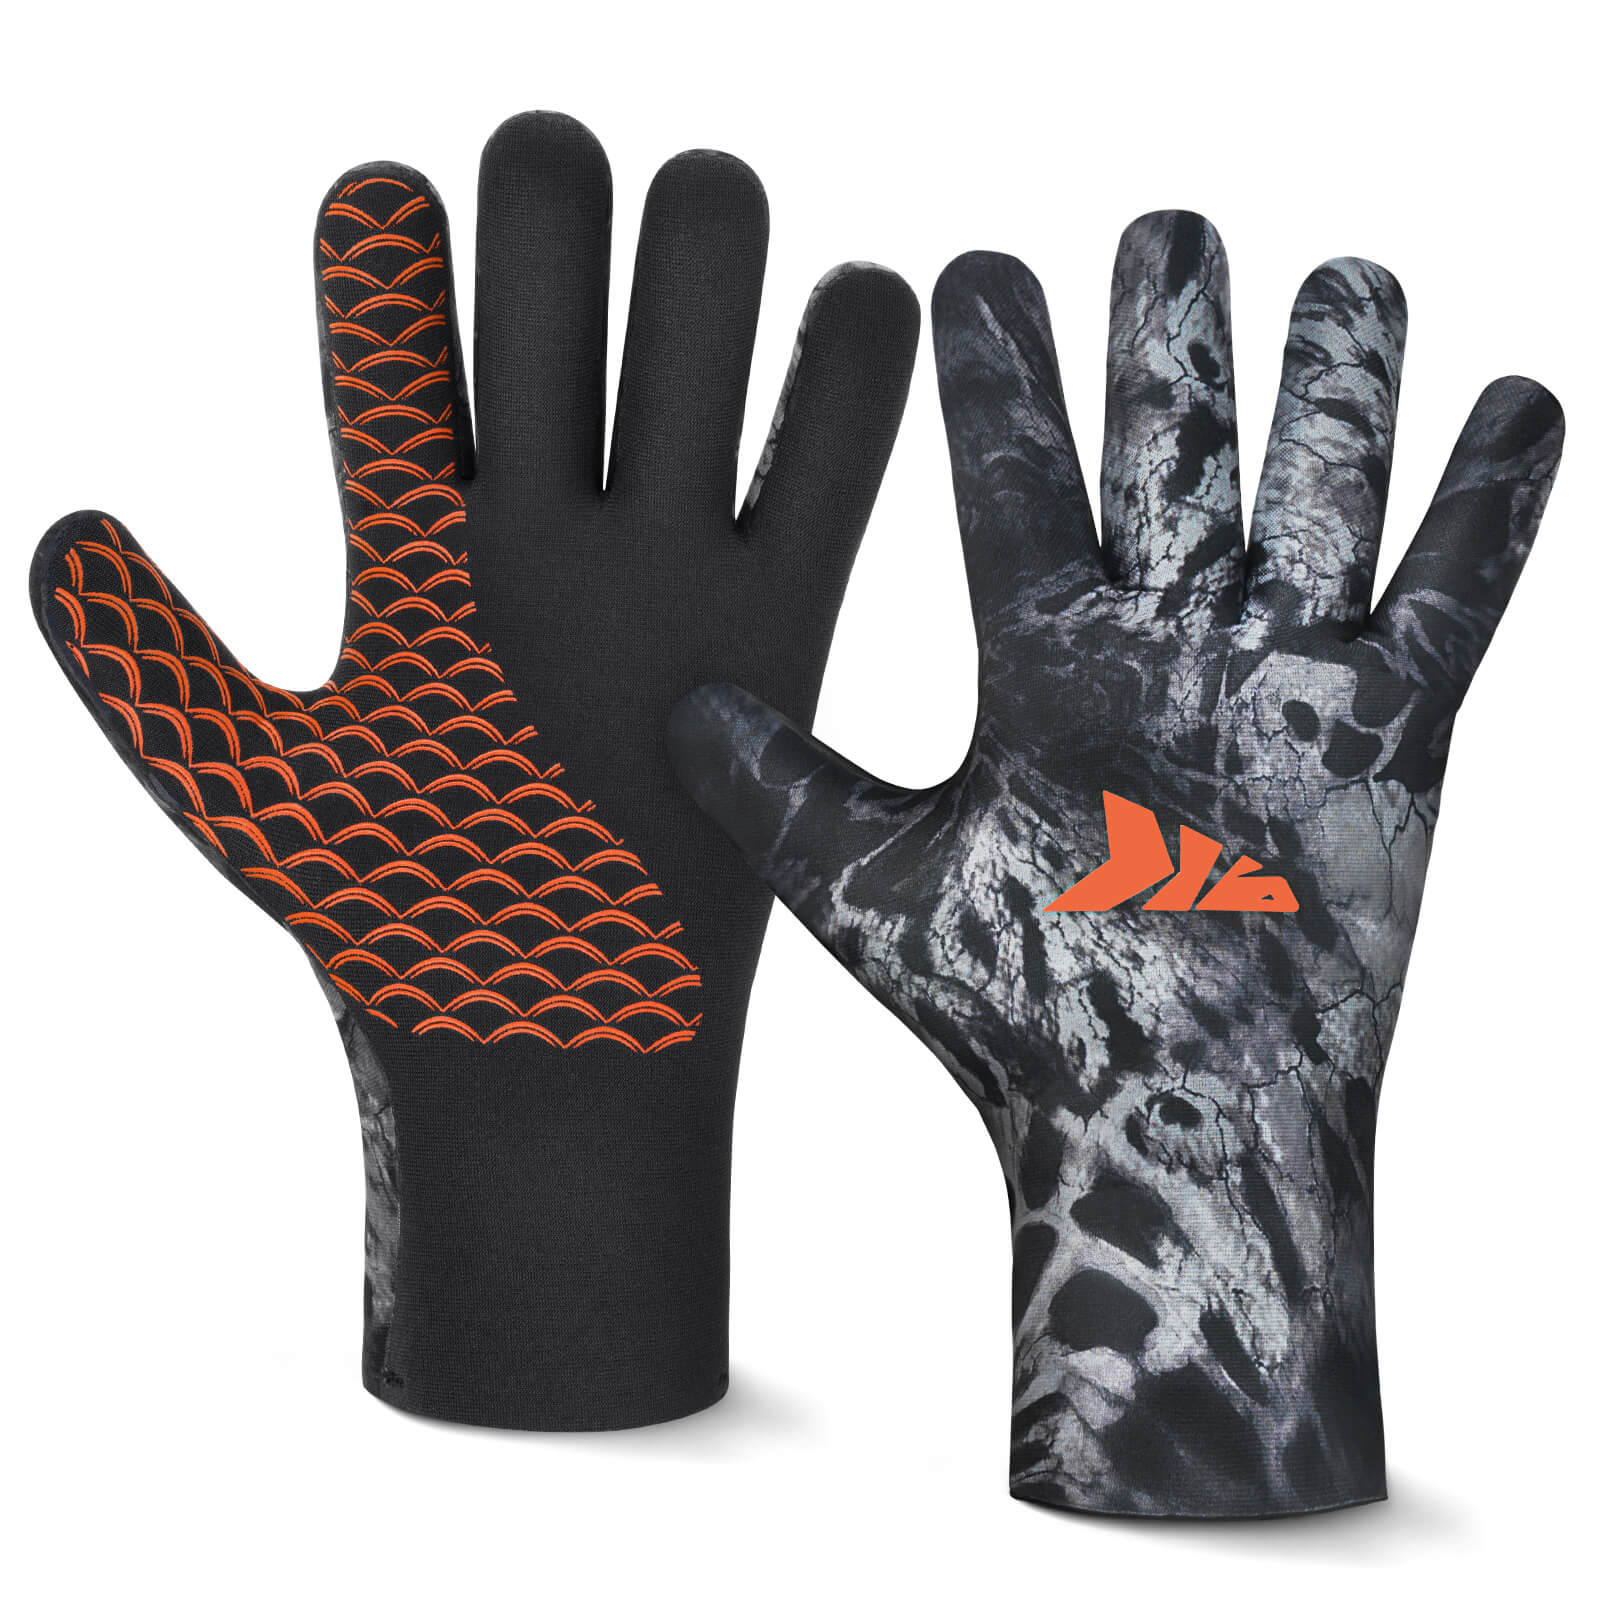 KastKing ThermoGrip Full Finger Waterproof Skiing & Ice Fishing Gloves